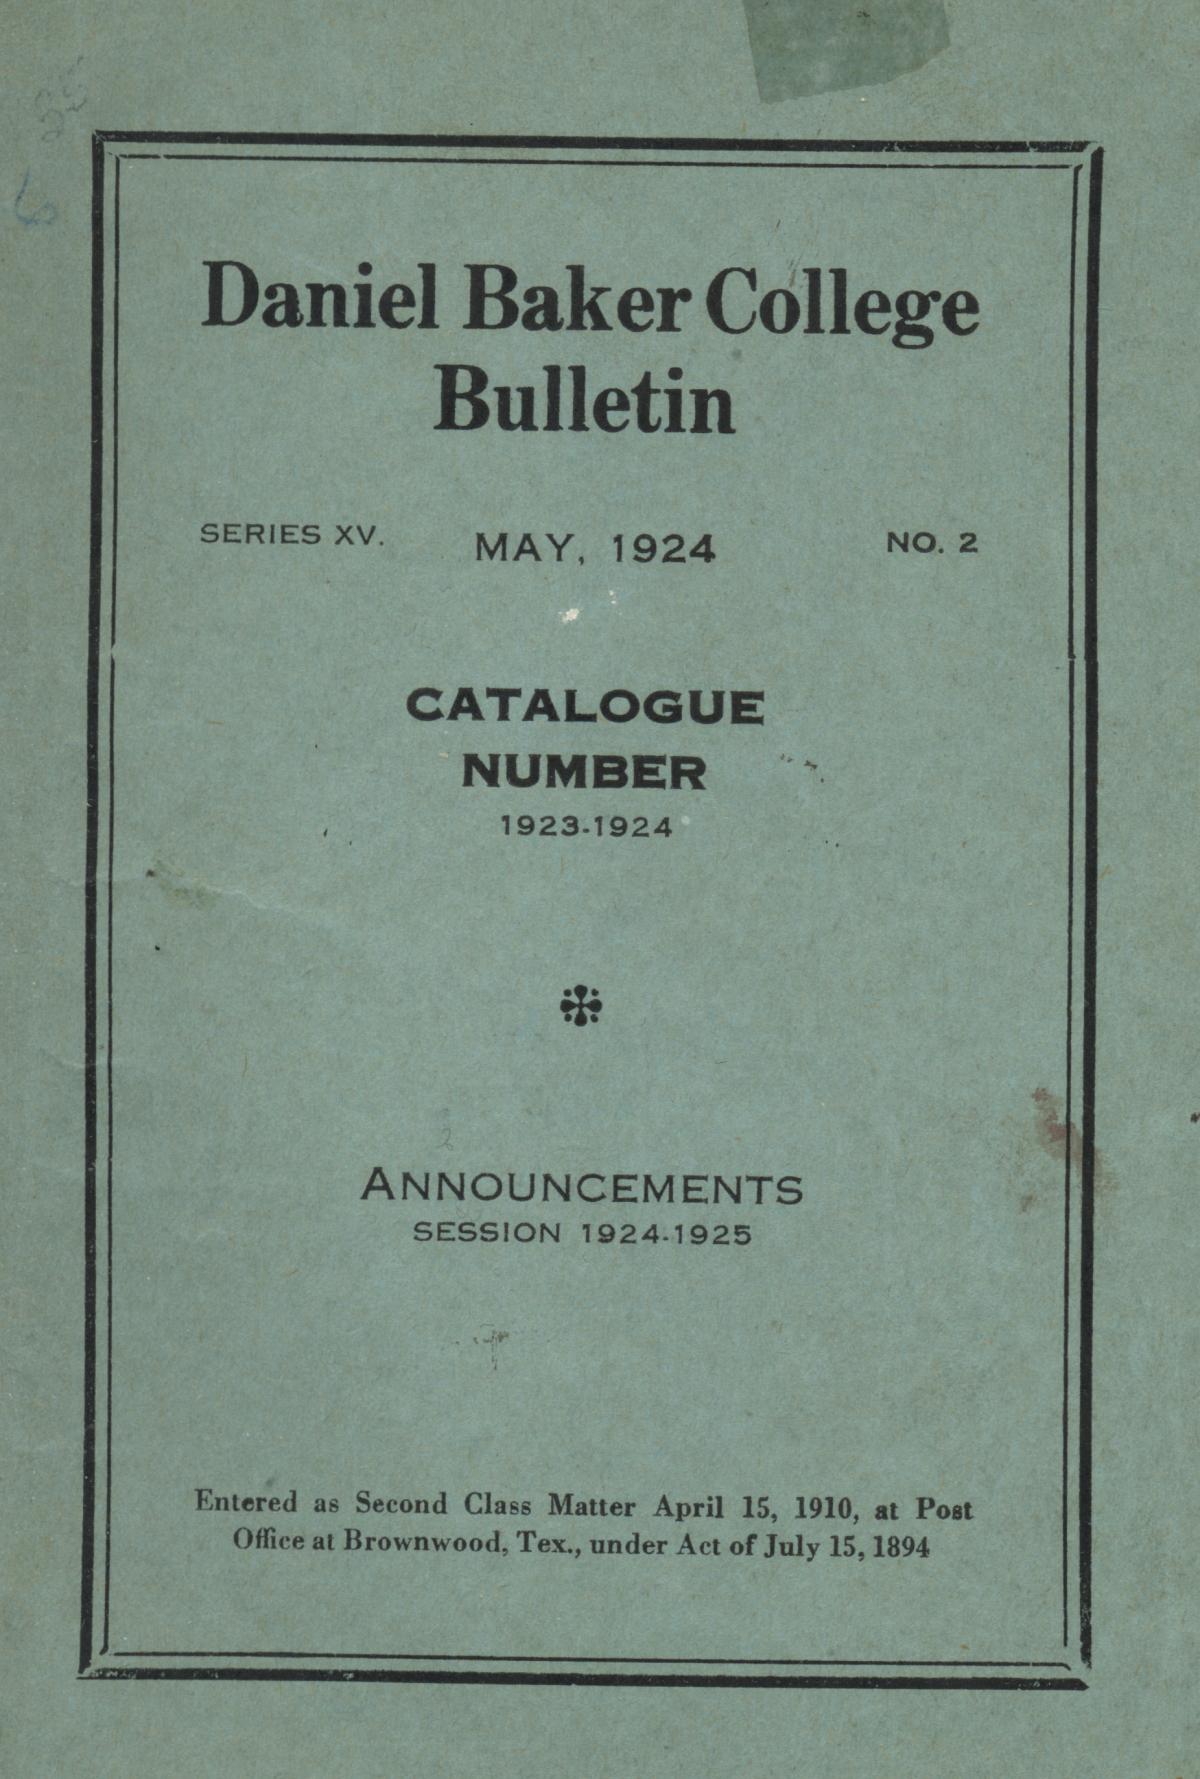 Catalog of Daniel Baker College, 1923-1924
                                                
                                                    Front Cover
                                                